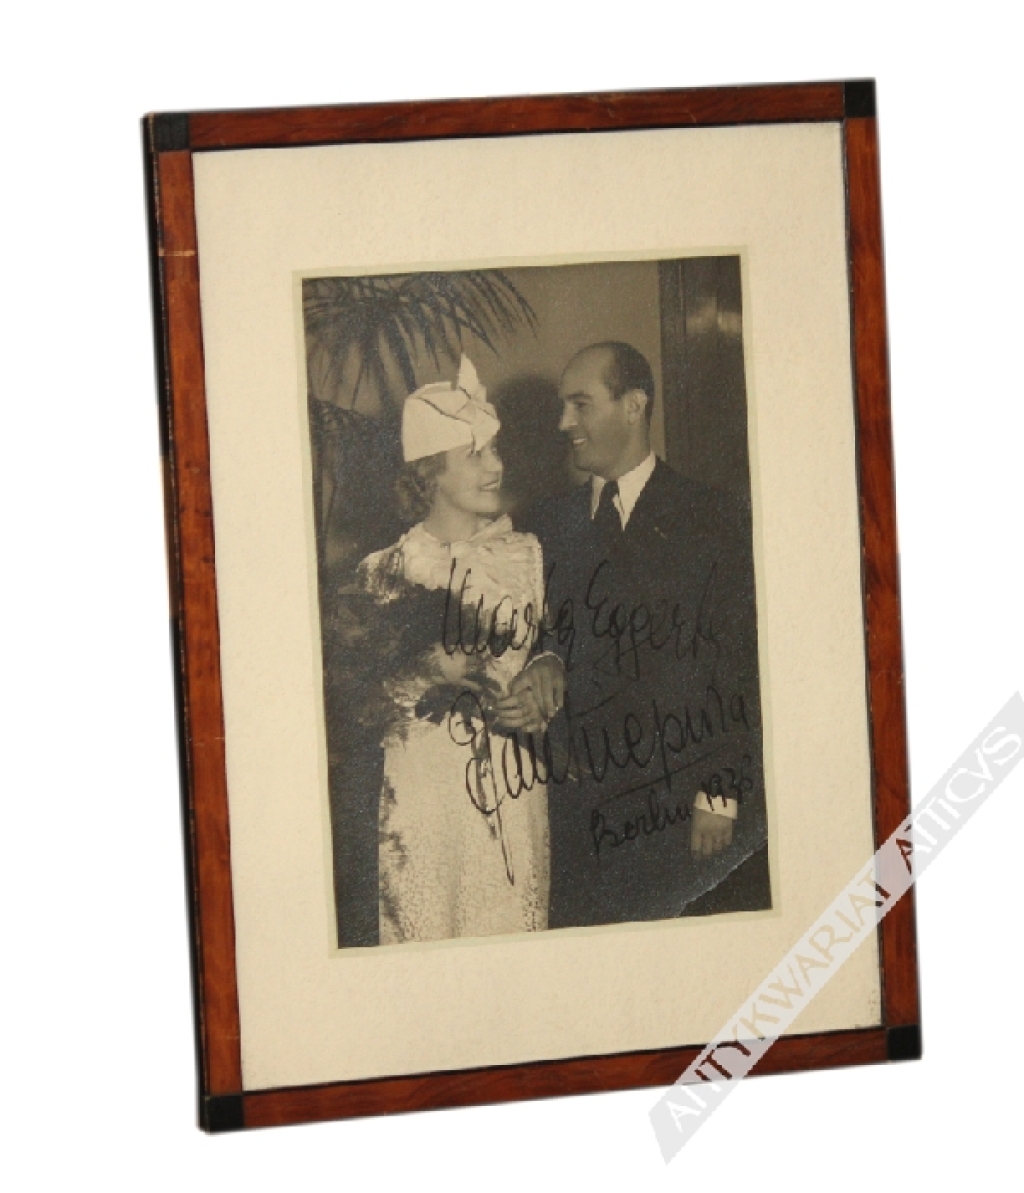 [fotografia, 1936] JAN KIEPURA I MARTA EGGERTH [autografy]